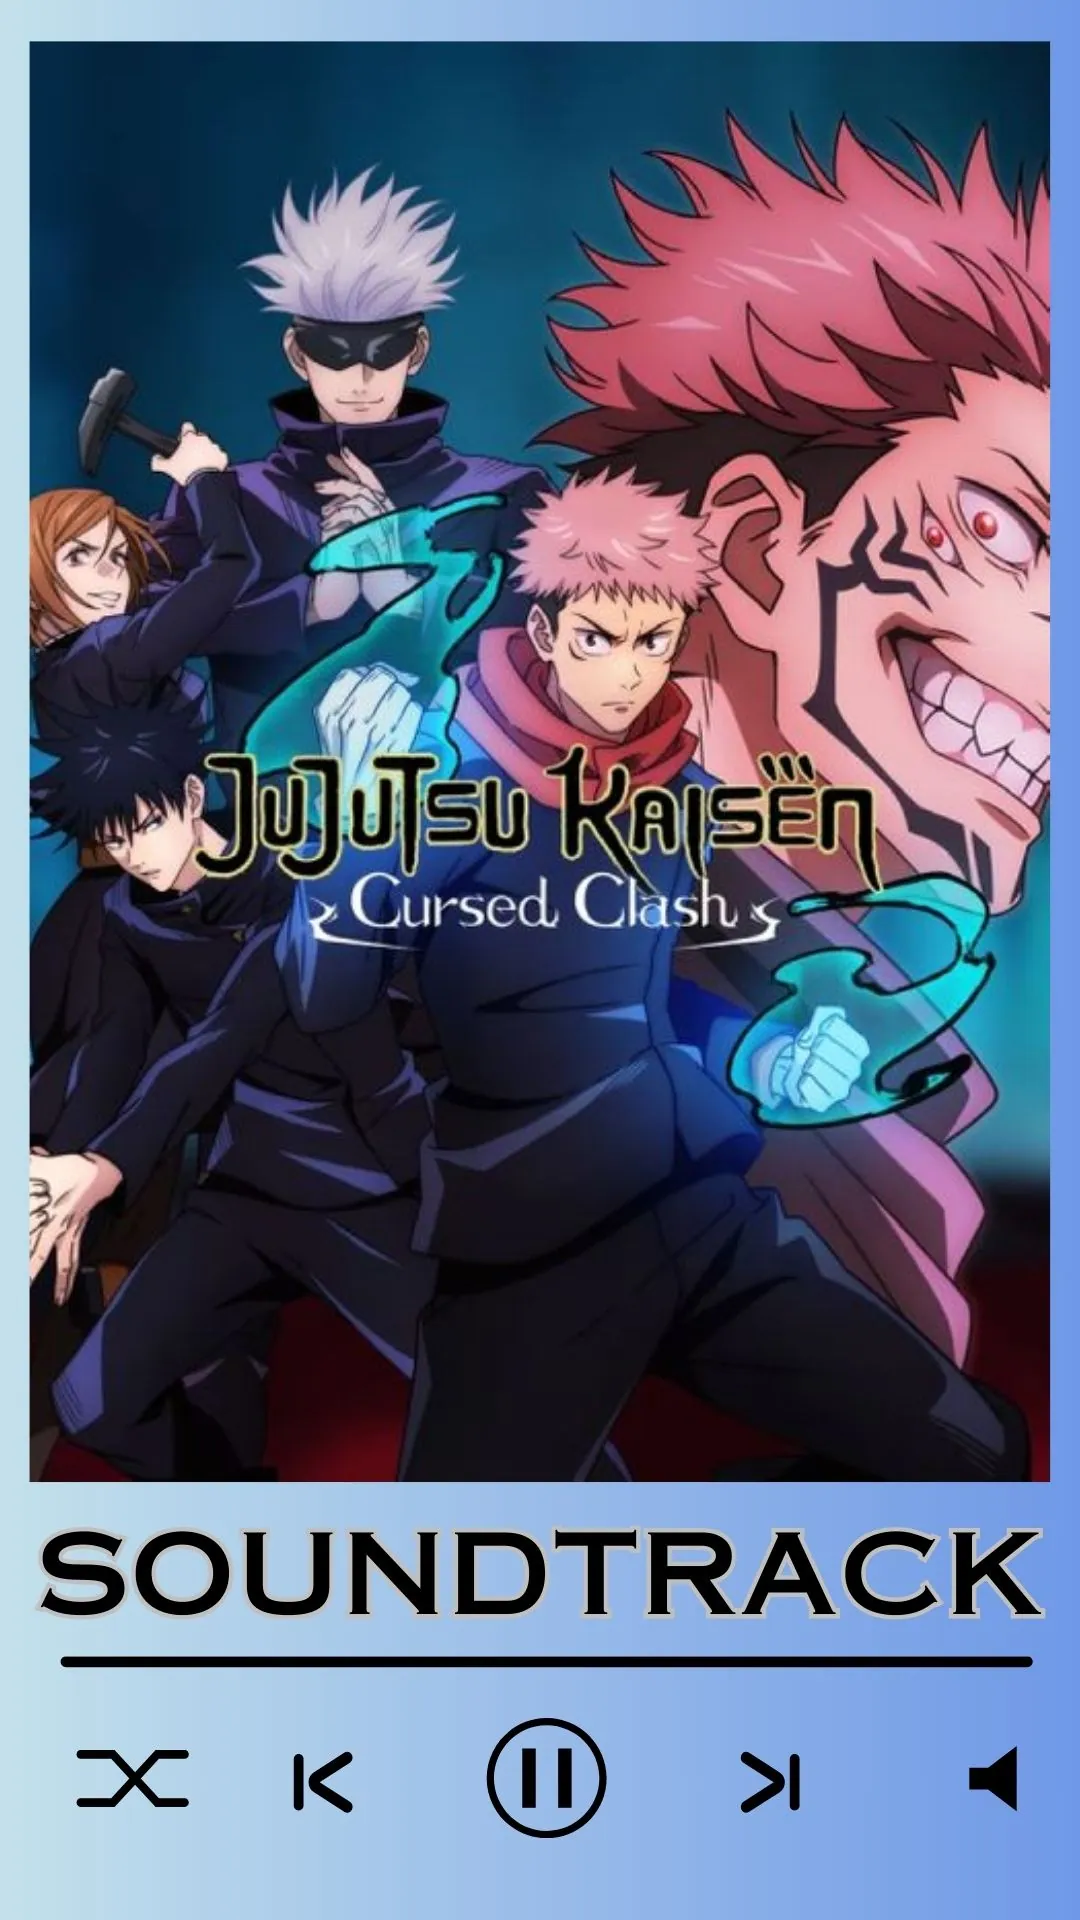 Jujutsu Kaisen: Cursed Clash Soundtrack